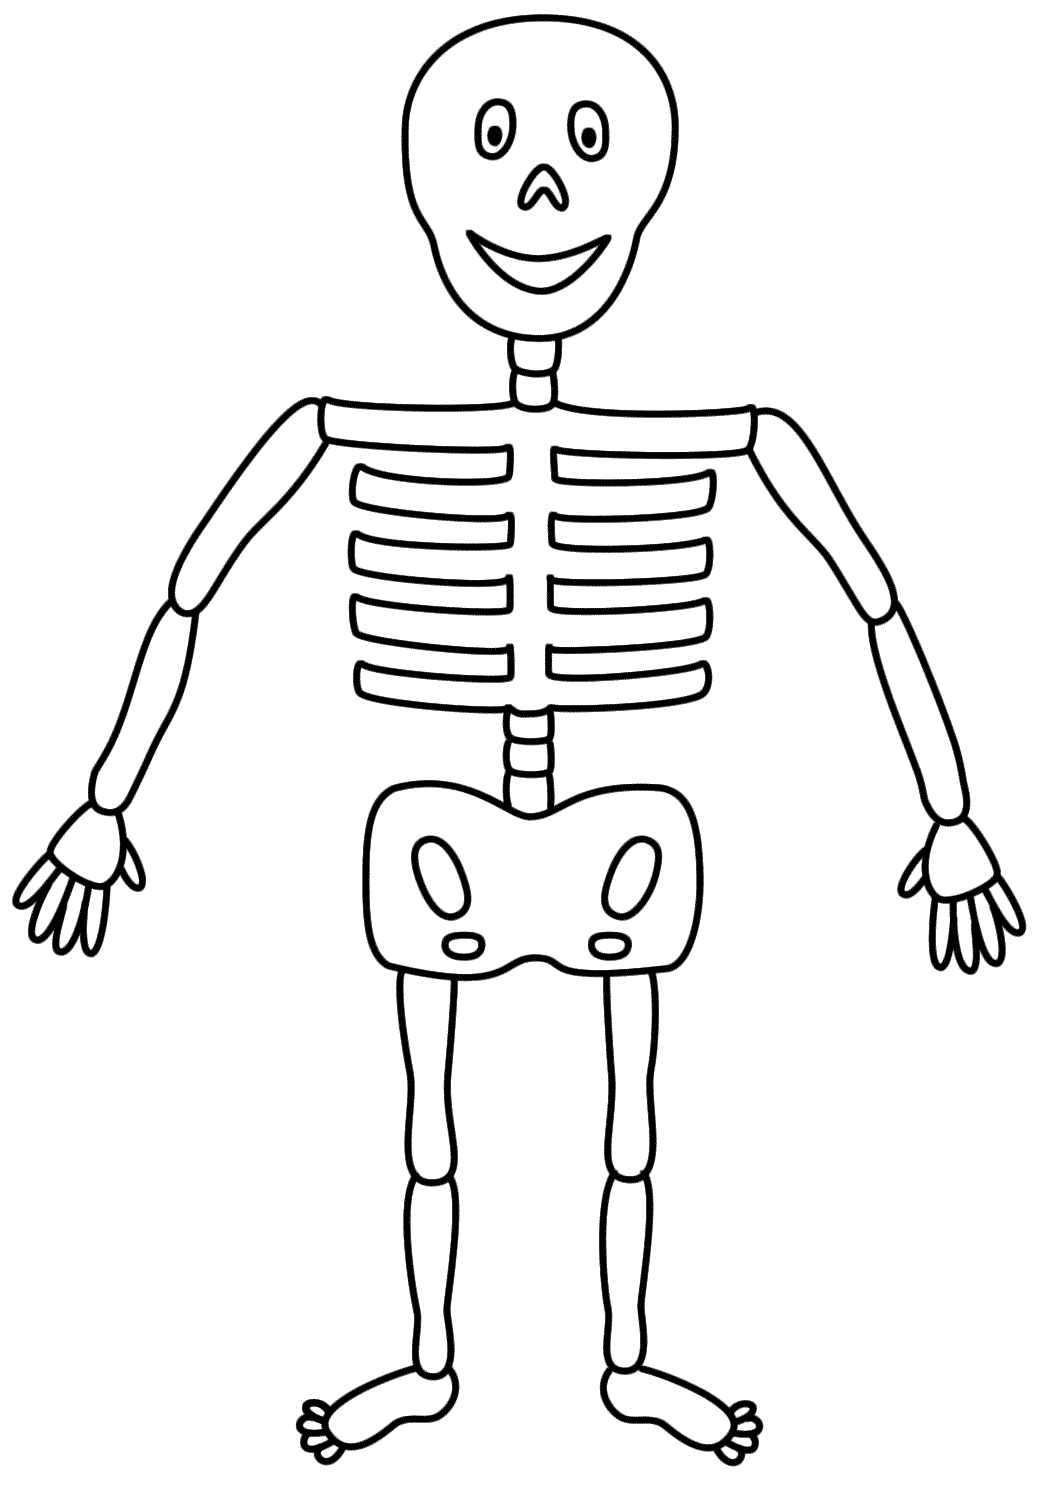 Kids Skeleton Drawing Free Download Clip Art Free Clip Art on